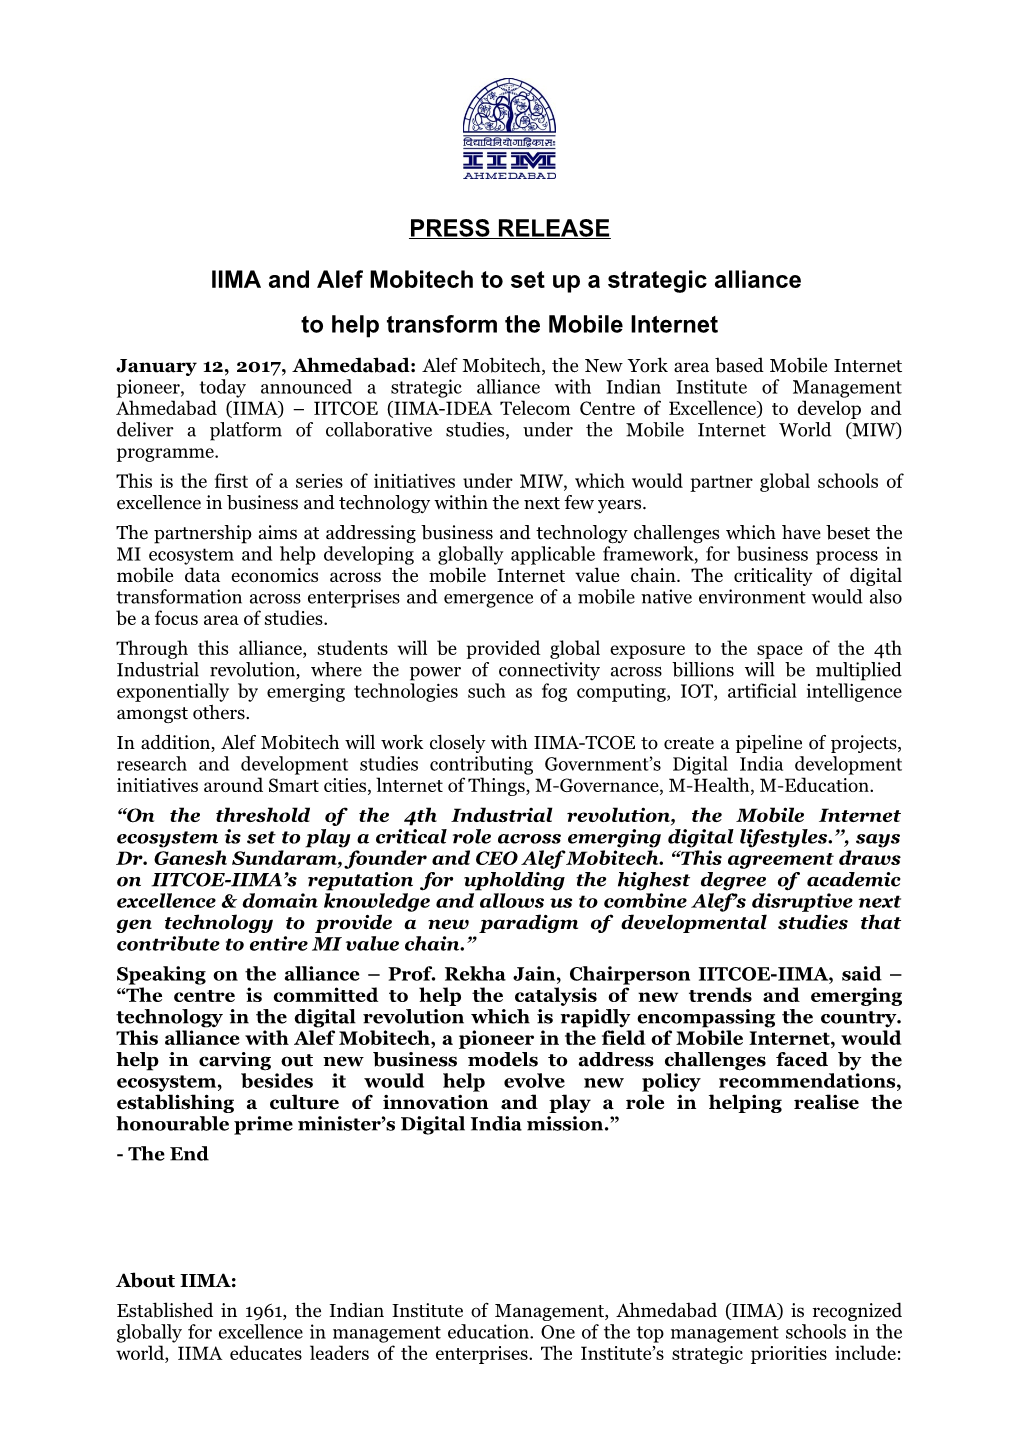 IIMA and Alef Mobitech to Set up a Strategic Alliance